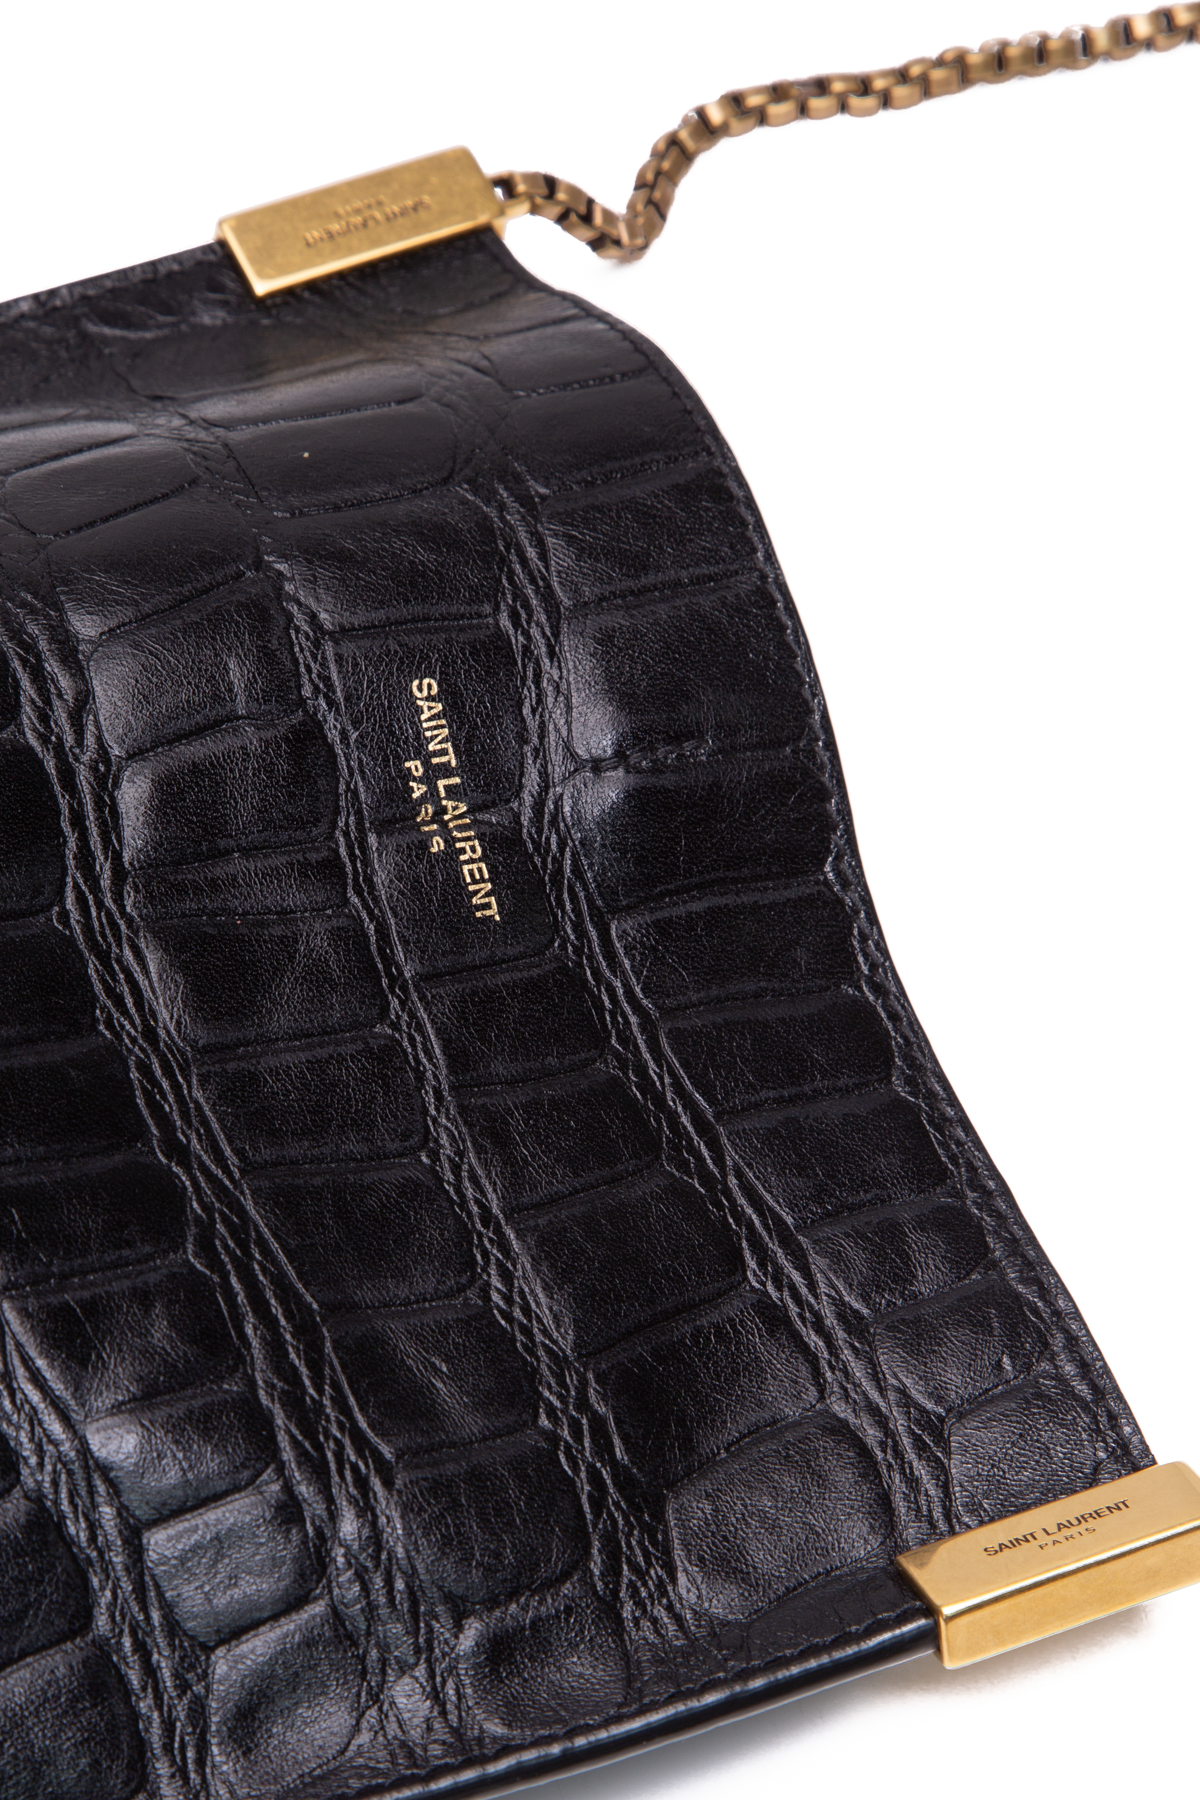 YVES SAINT LAURENT Crocodile Black Leather Gold Chain Clutch Crossbody Bag